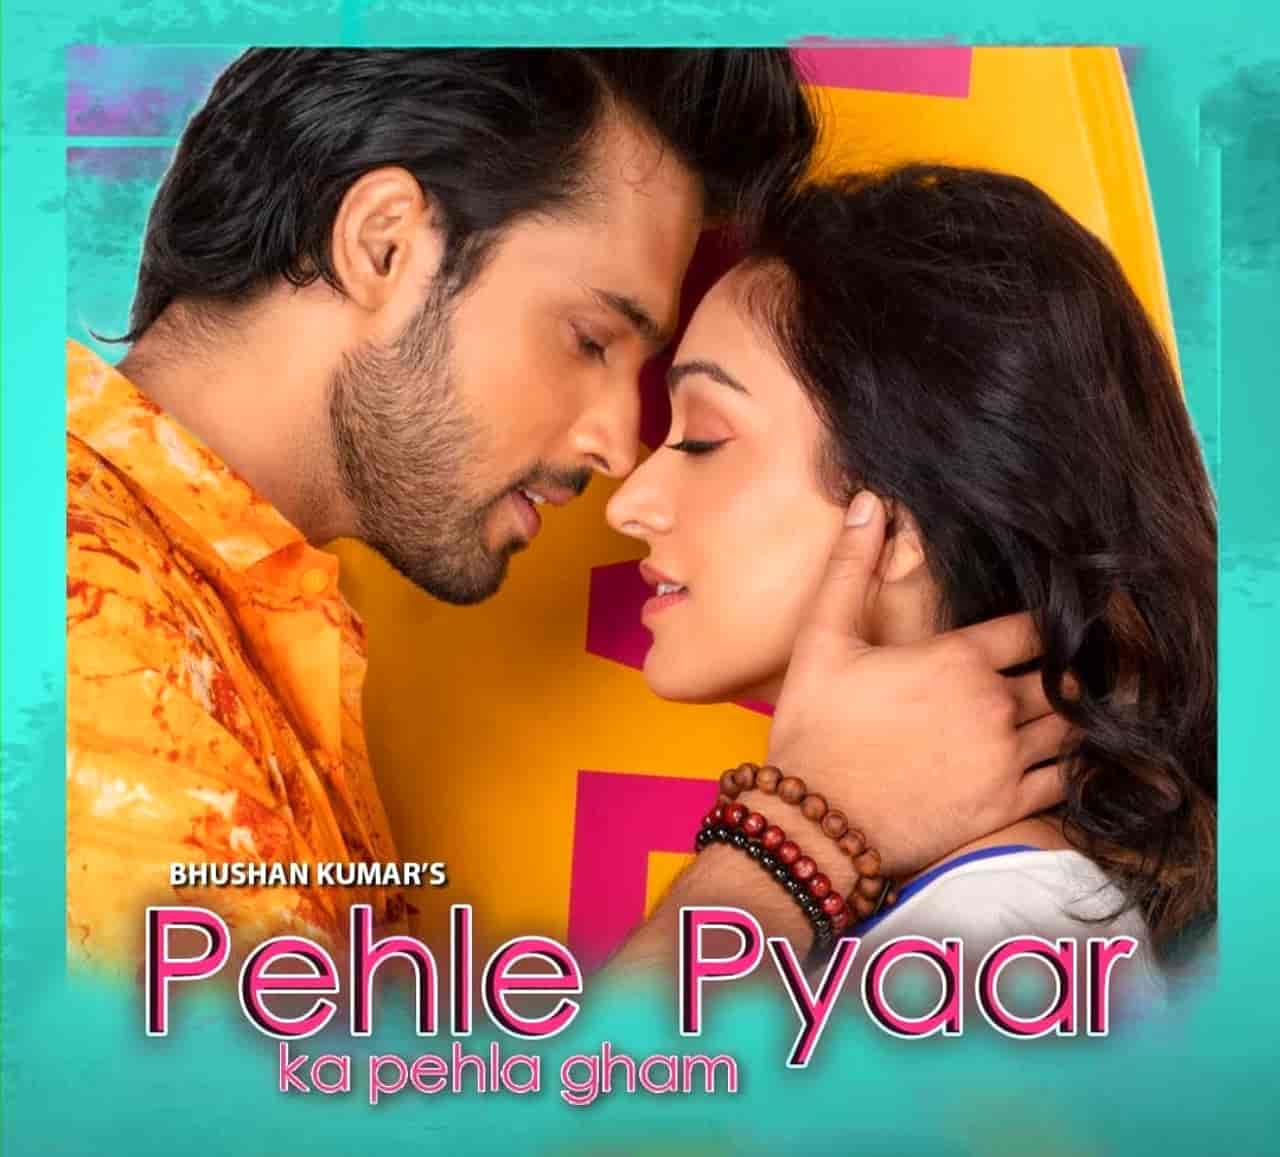 Pehle Pyaar Ka Pehla Gham Hindi Song Image Features Parth Samthaan And Khushali Kumar